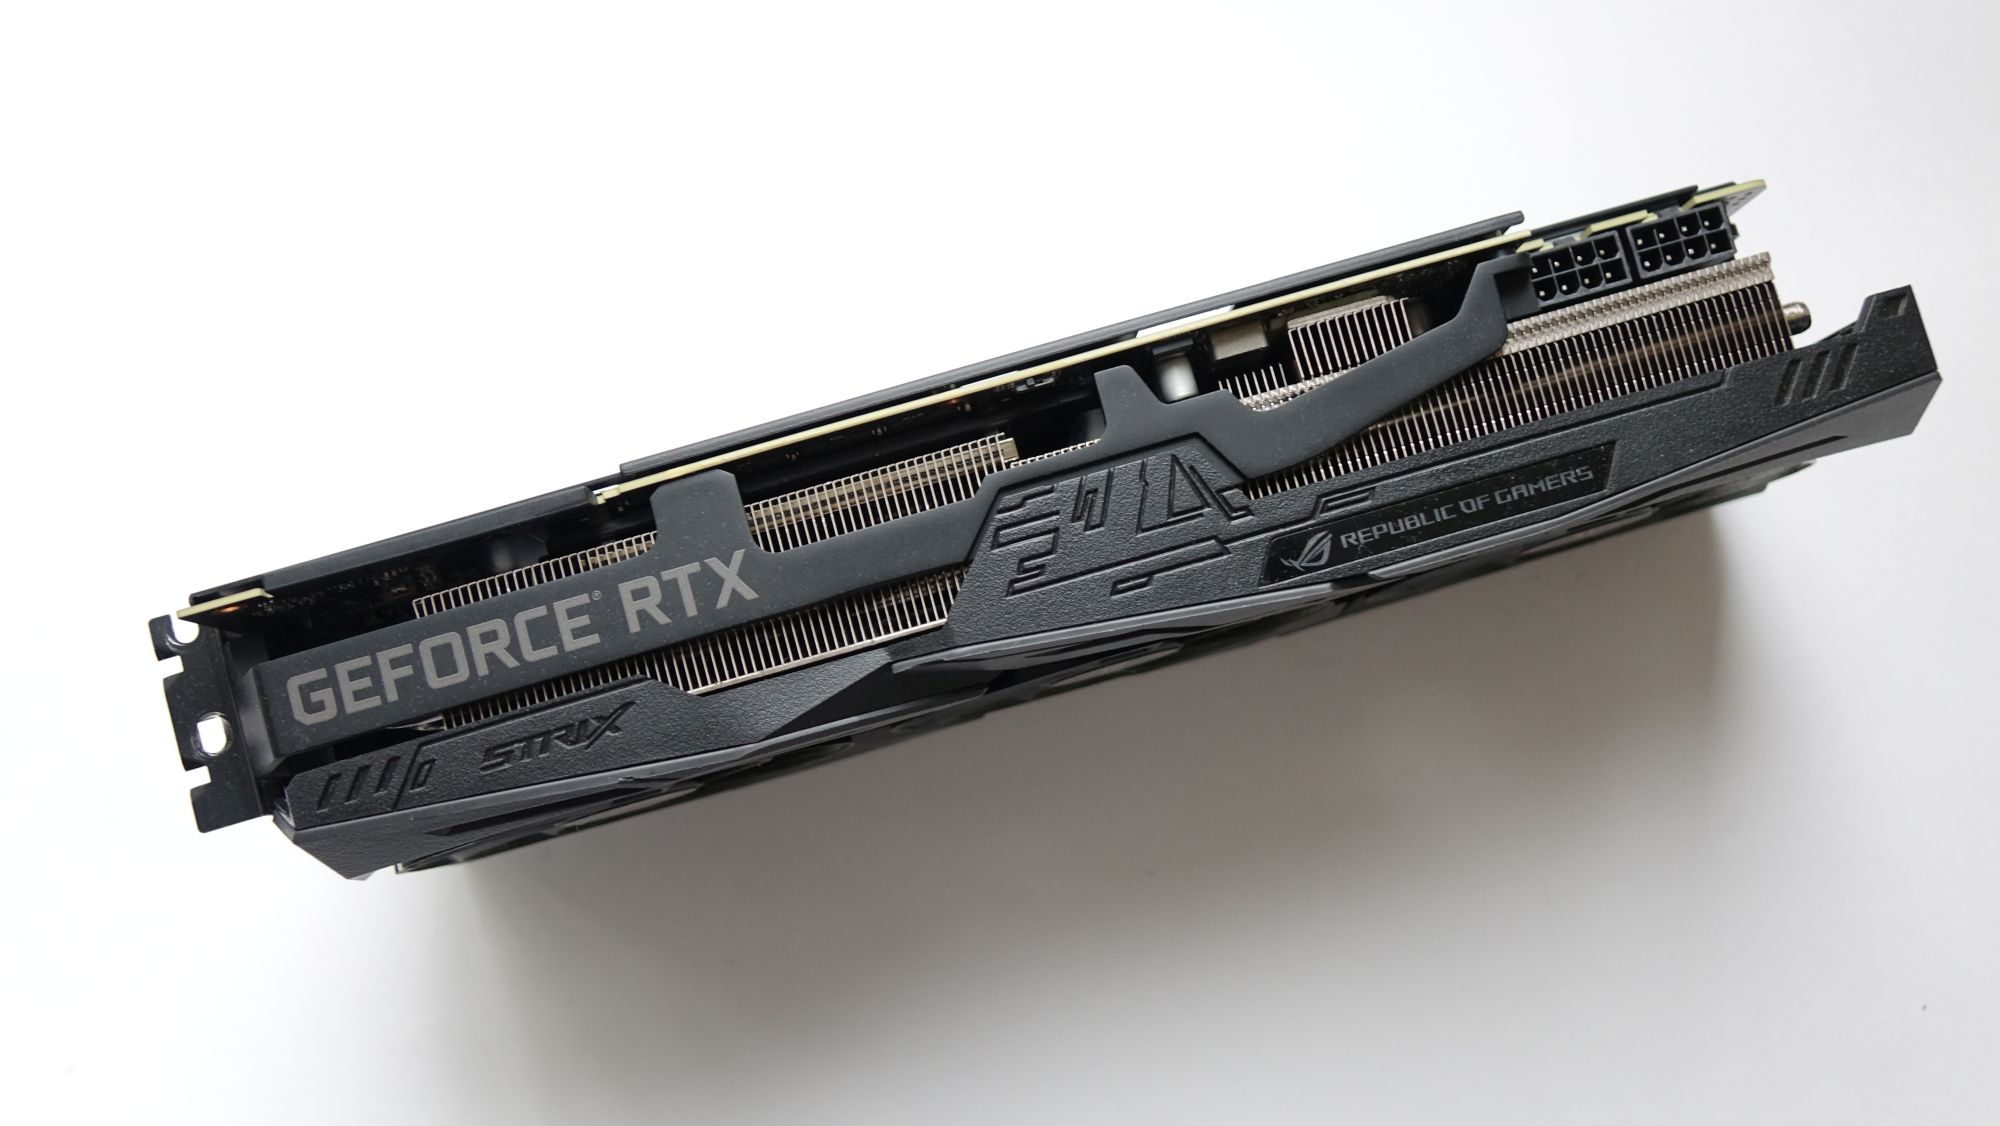 ASUS ROG Strix GeForce RTX 2080 радиатор